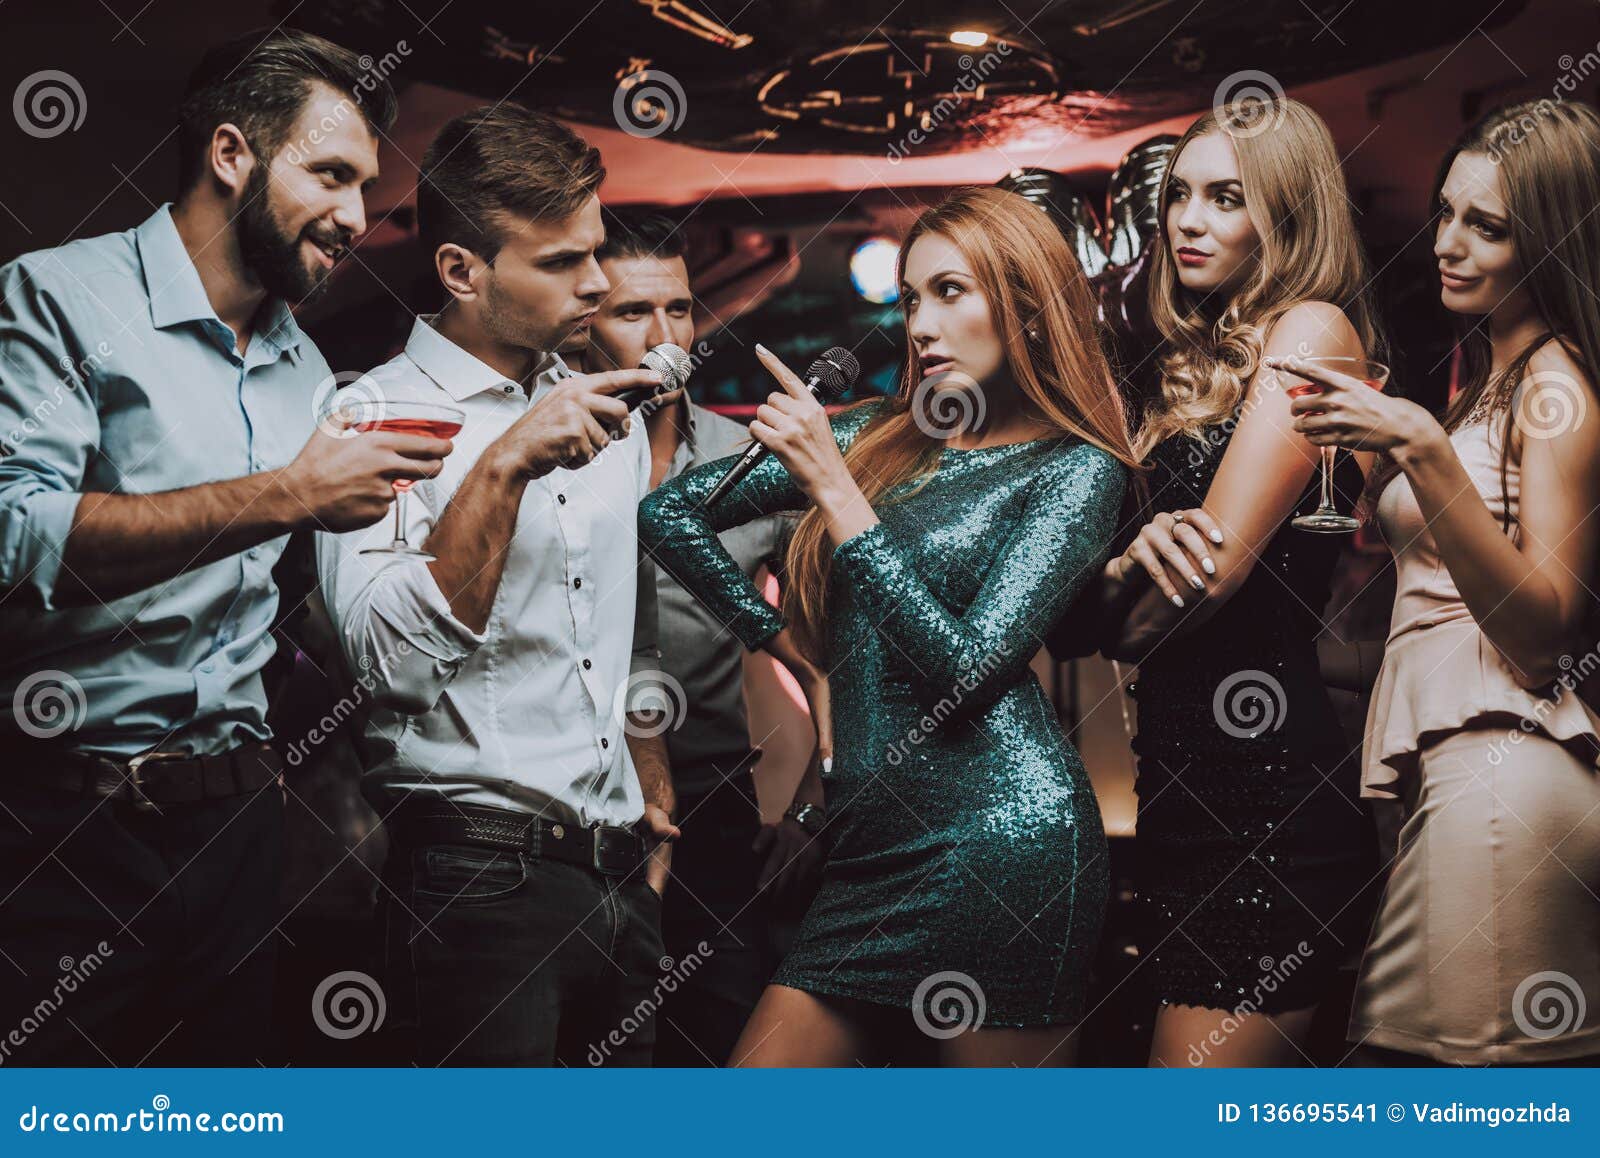 Karaoke Club. Celebration. Young People. Smile. Stock Image - Image of ...